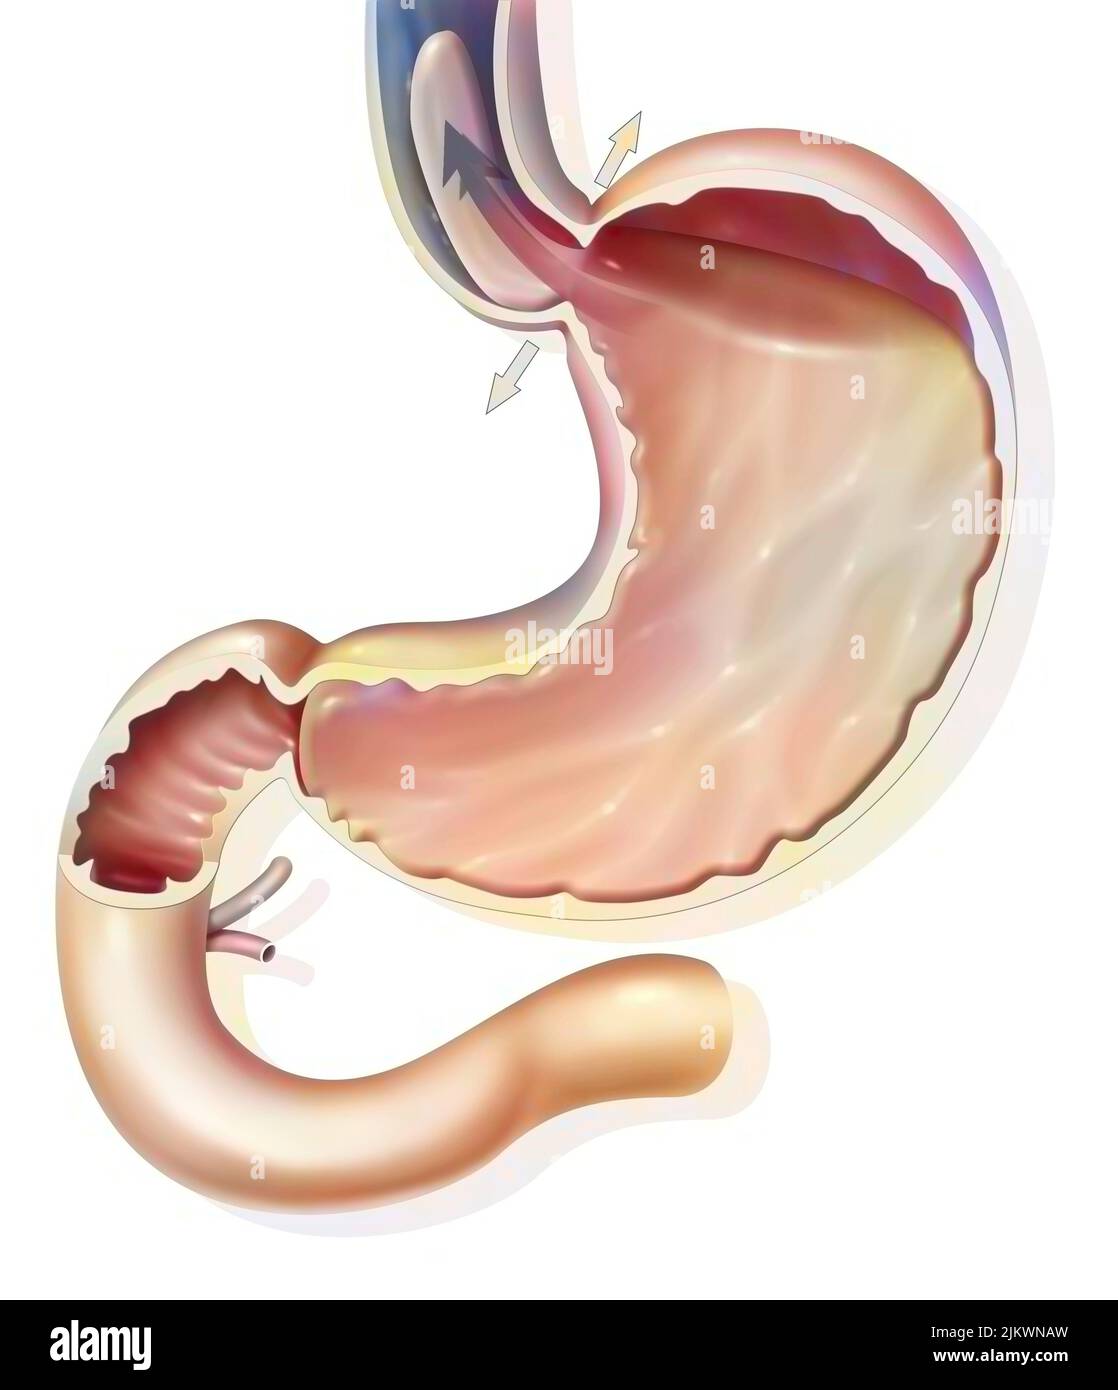 Estomac : reflux gastro-oesophagien dans le sphincter gastro-oesophagien. Banque D'Images